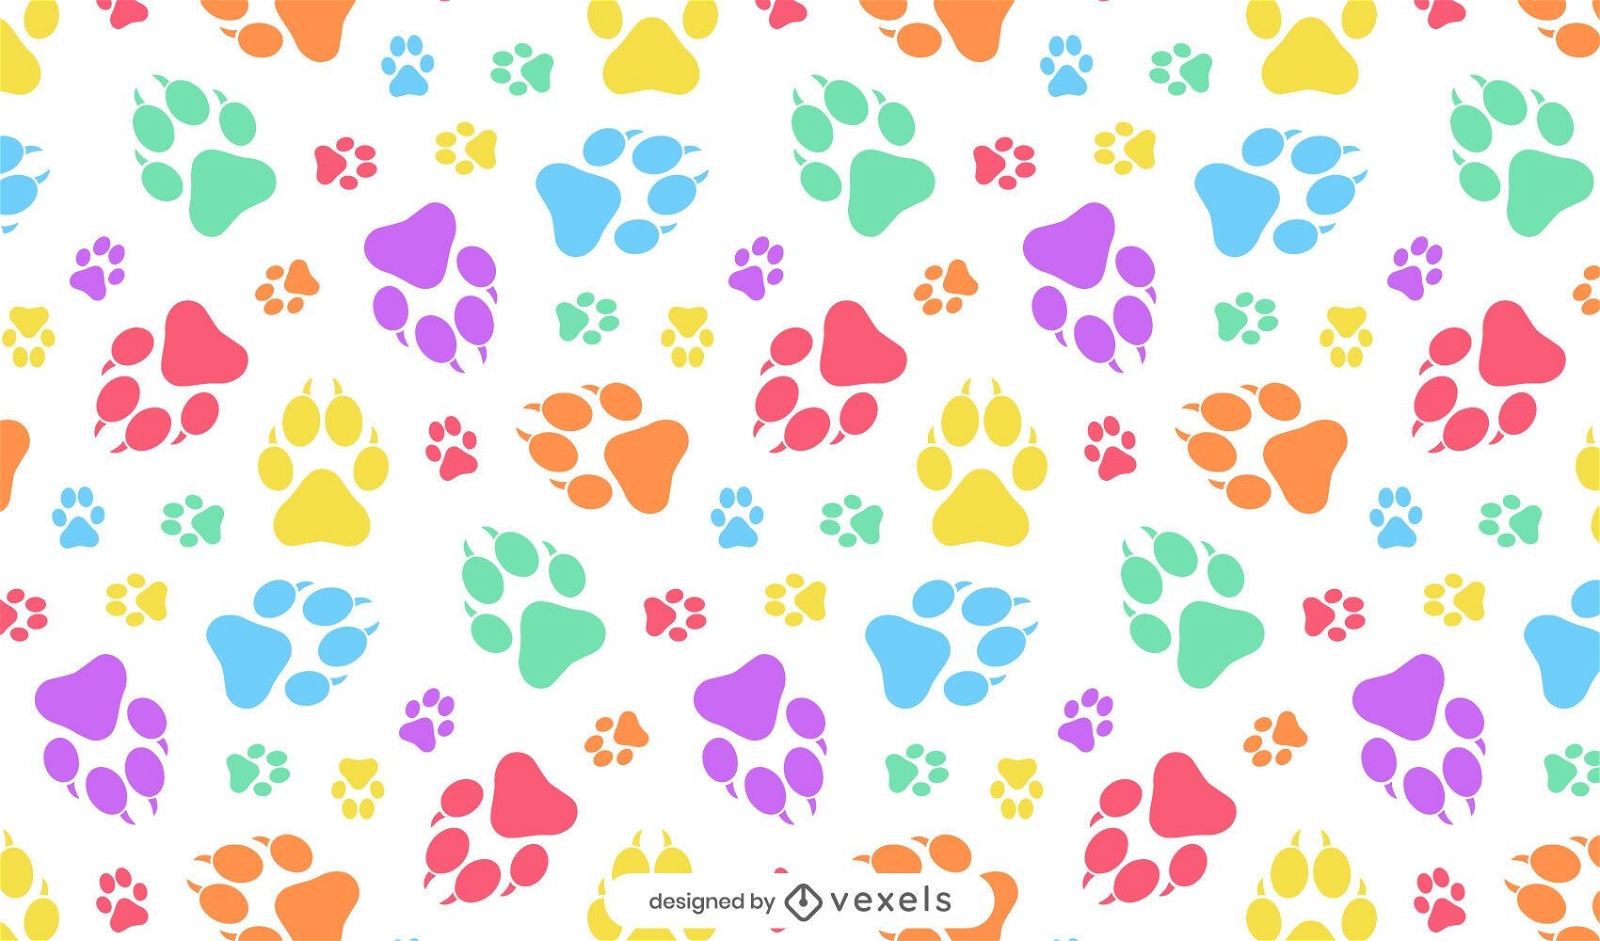 Puppy paw prints pattern design